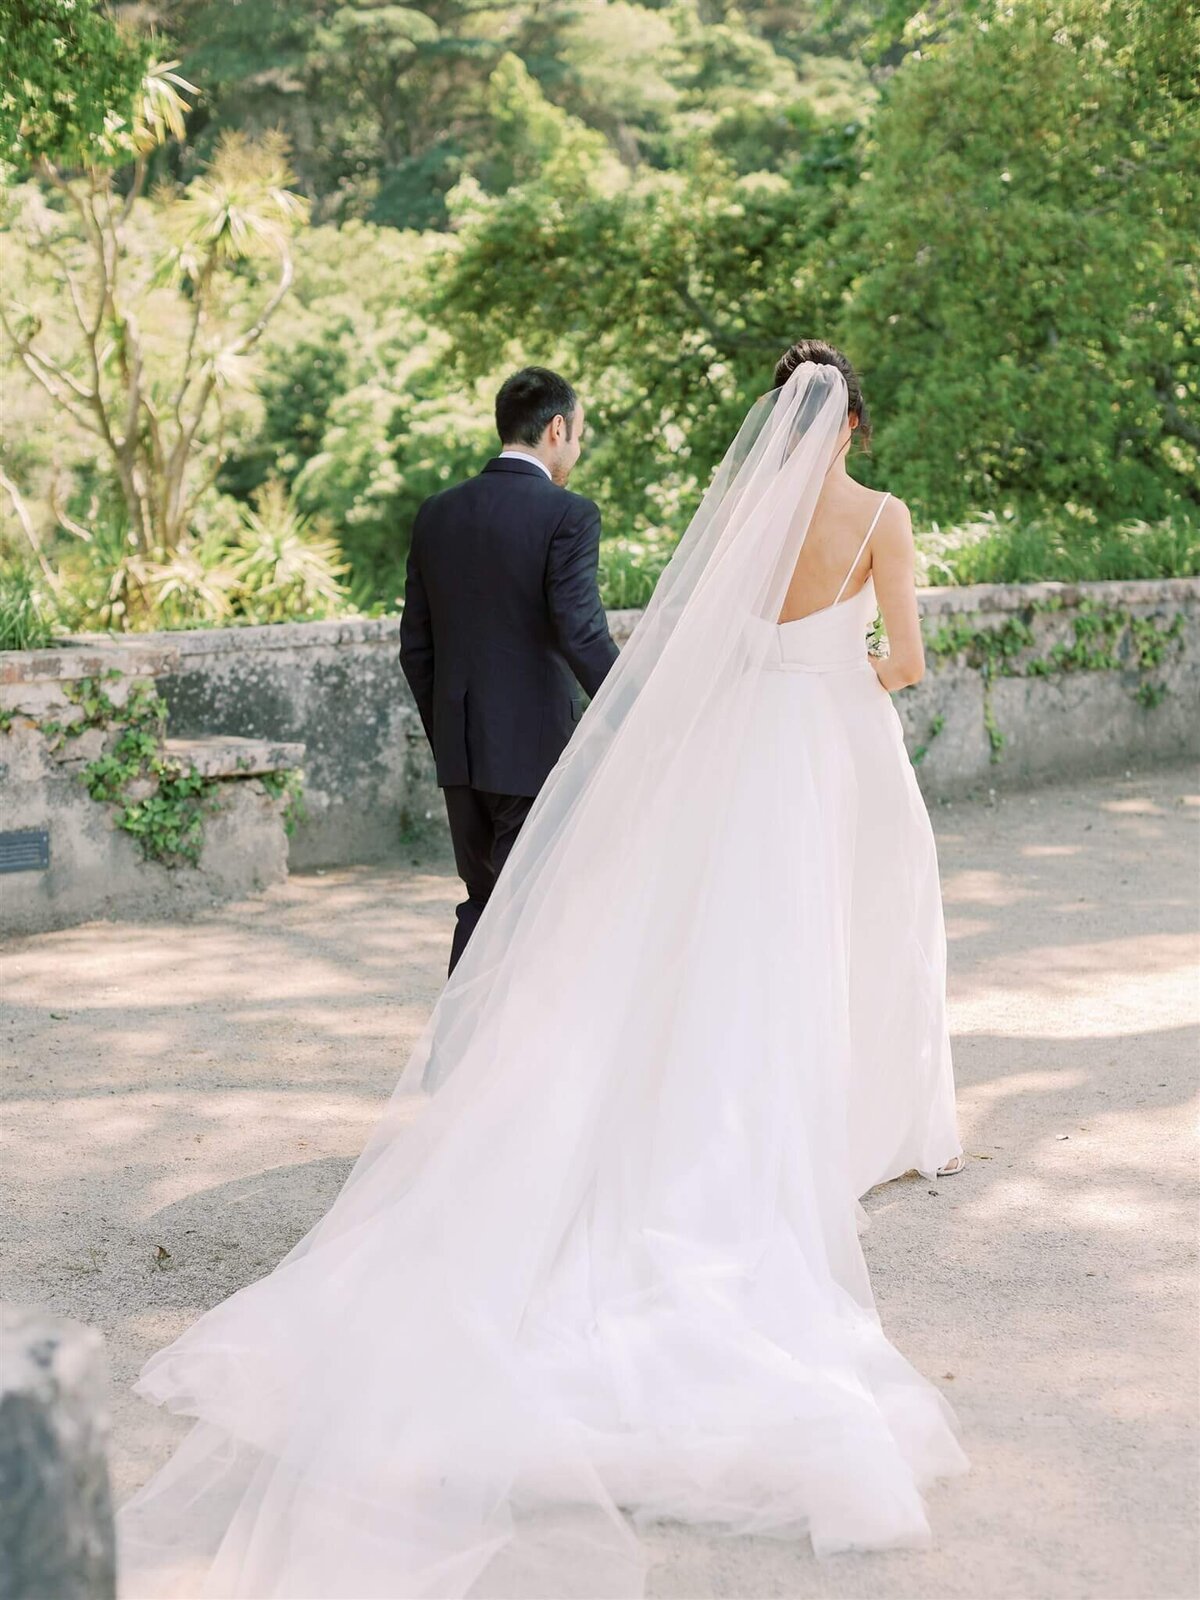 DianeSoteroPhotography_TivoliPalaciodeSeteais_Sintra_Wedding_Elopement_270